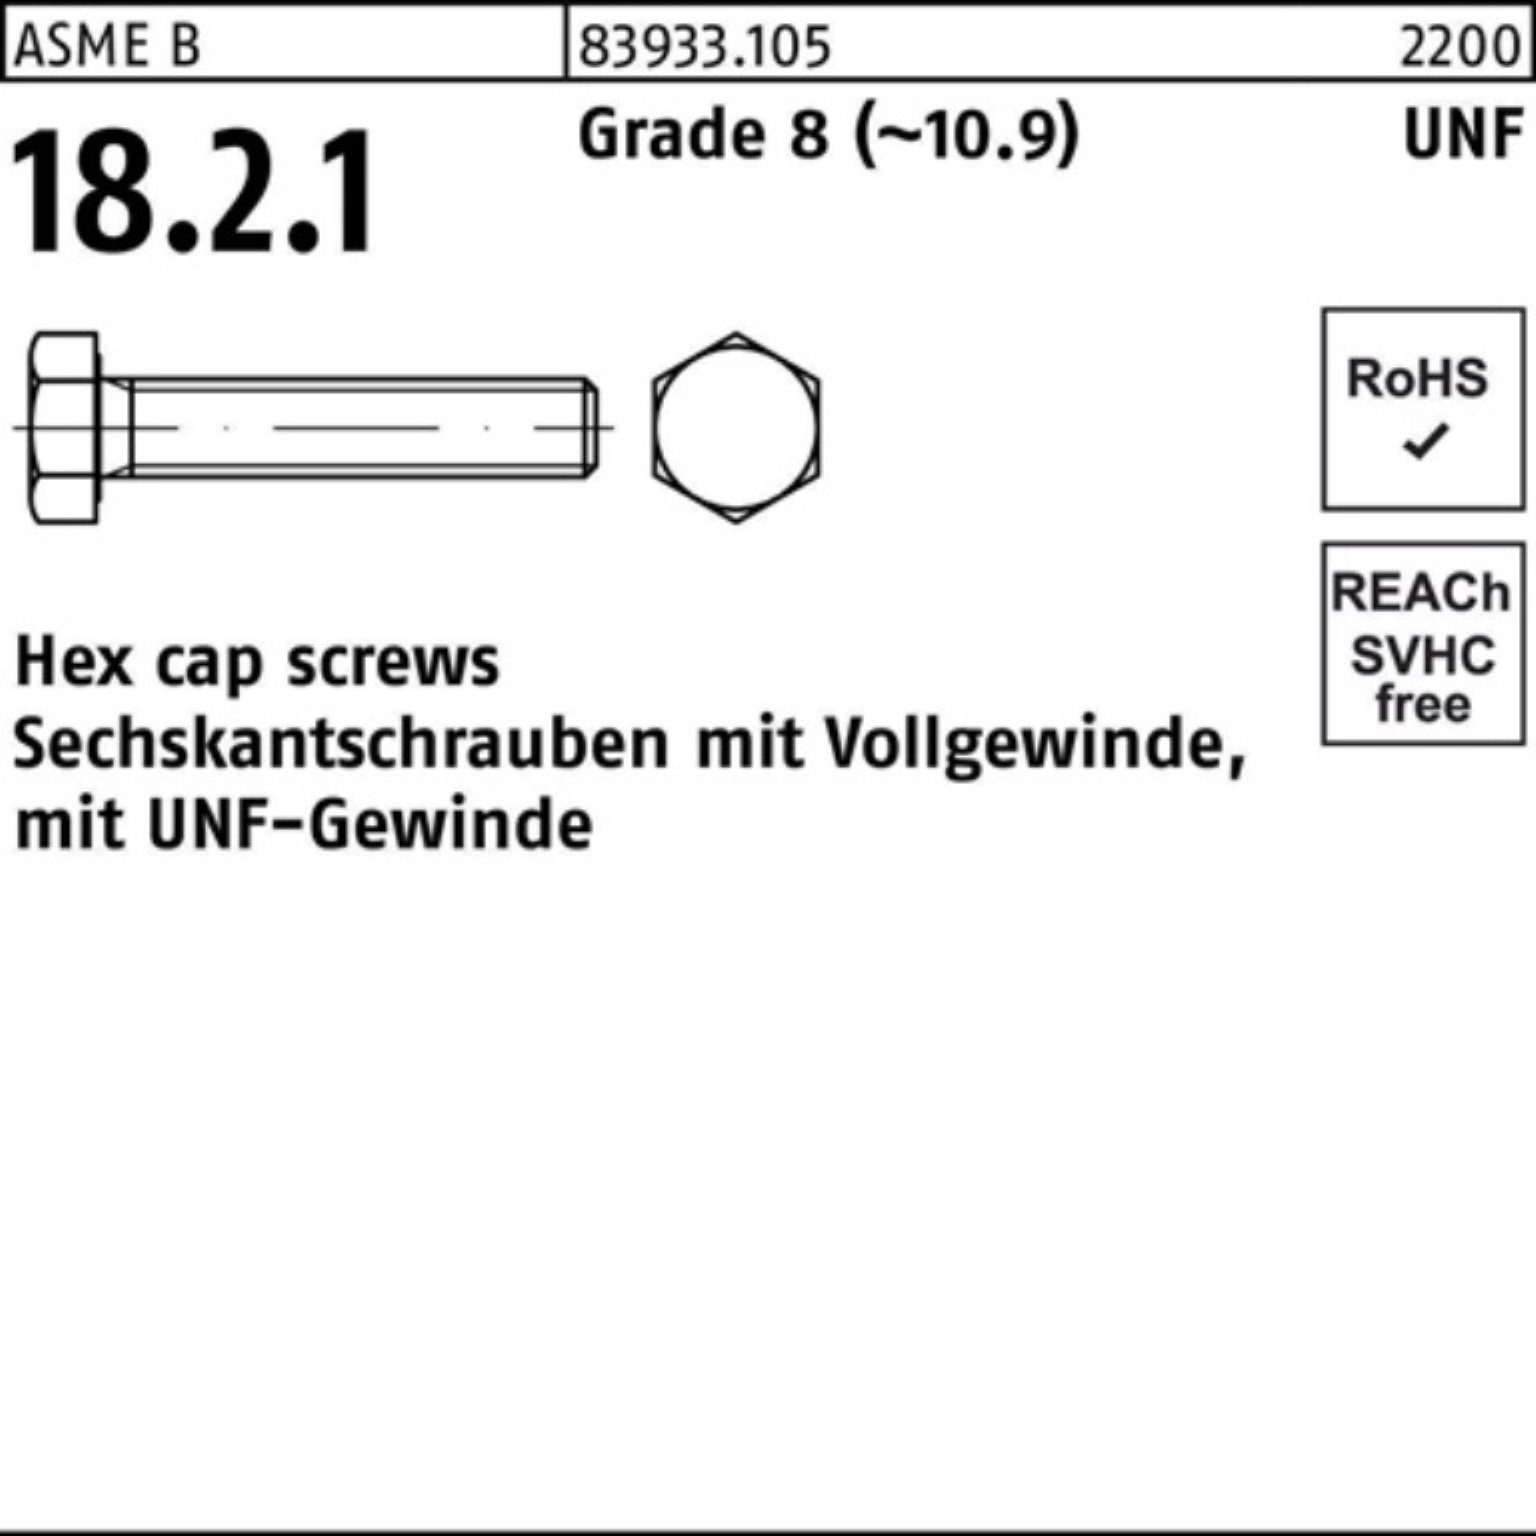 Reyher Sechskantschraube 100er Pack Sechskantschraube R 83933 UNF-Gewinde VG 5/16x 1 Grade 8